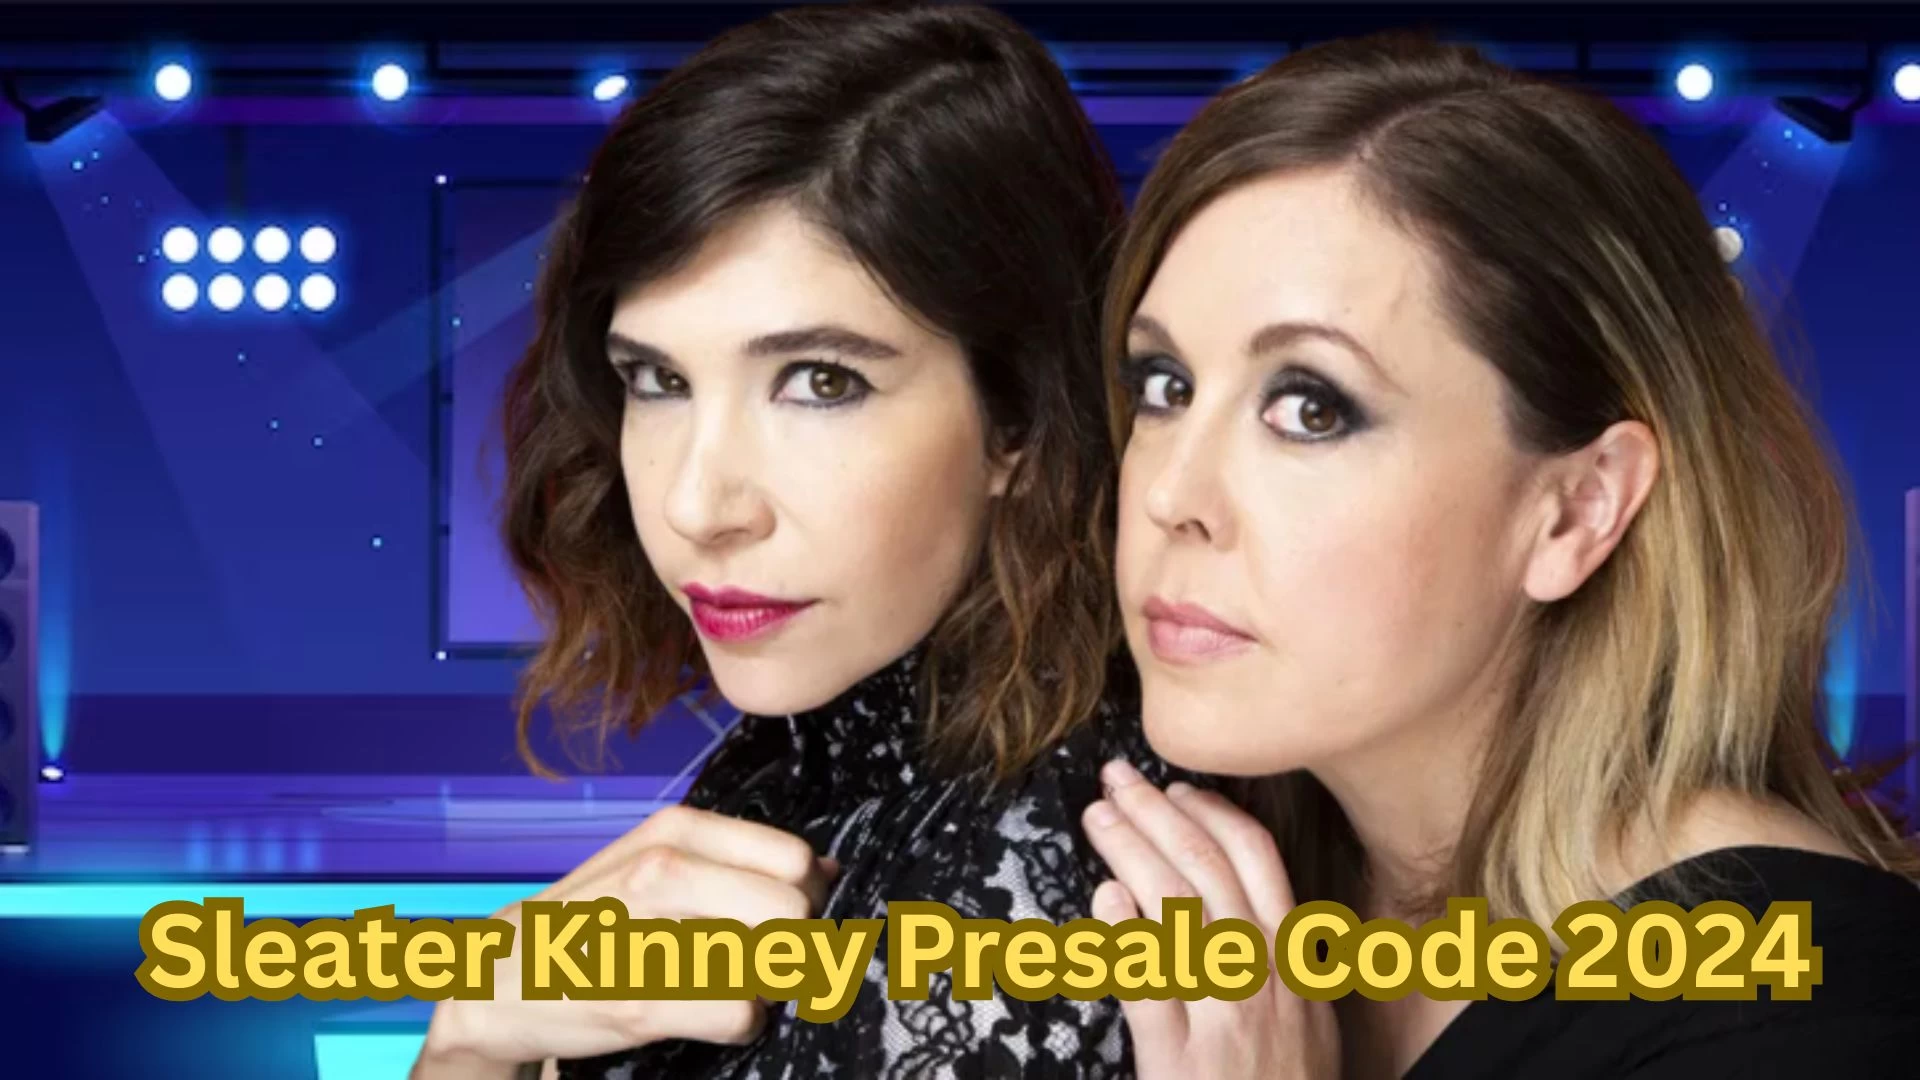 Sleater Kinney Presale Code 2024: How to Get Sleater Kinney Presale Tickets?